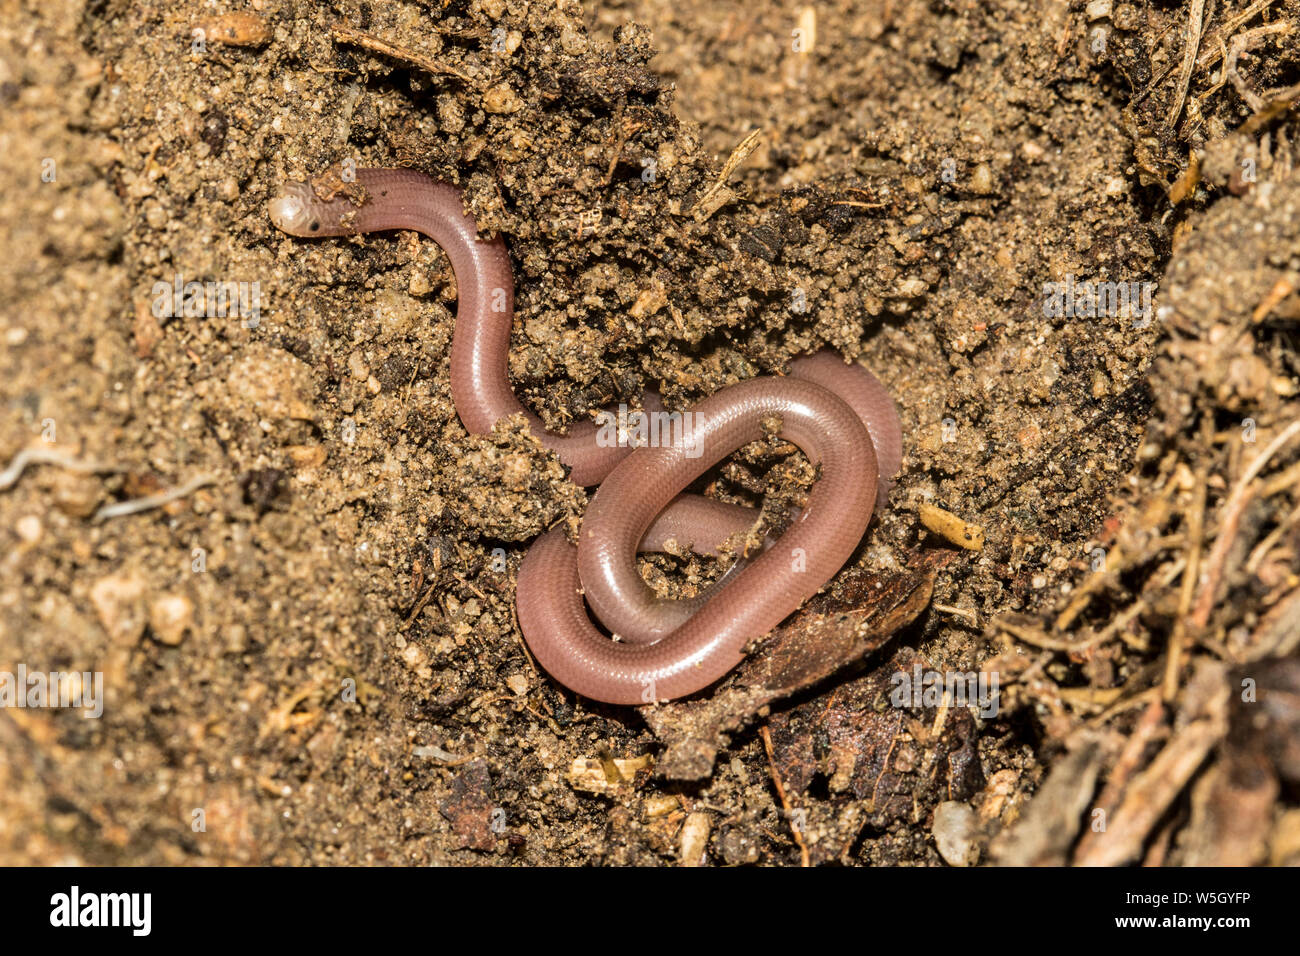 Worm snake - Typhlops vermicularis Merrem Stock Photo